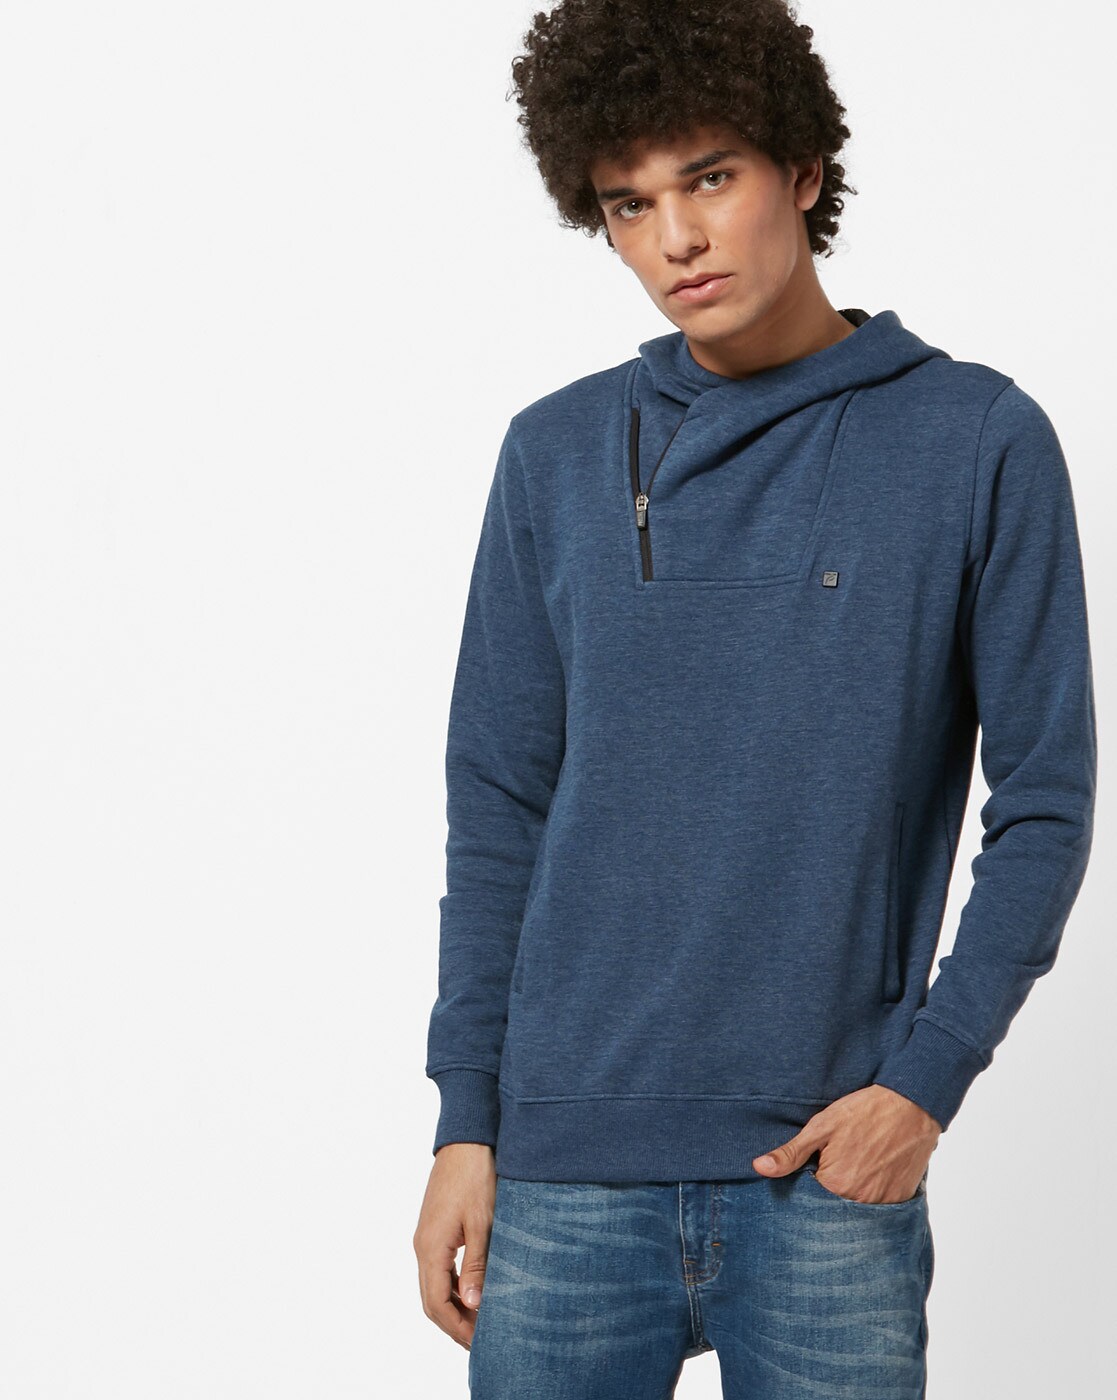 proline sweatshirt